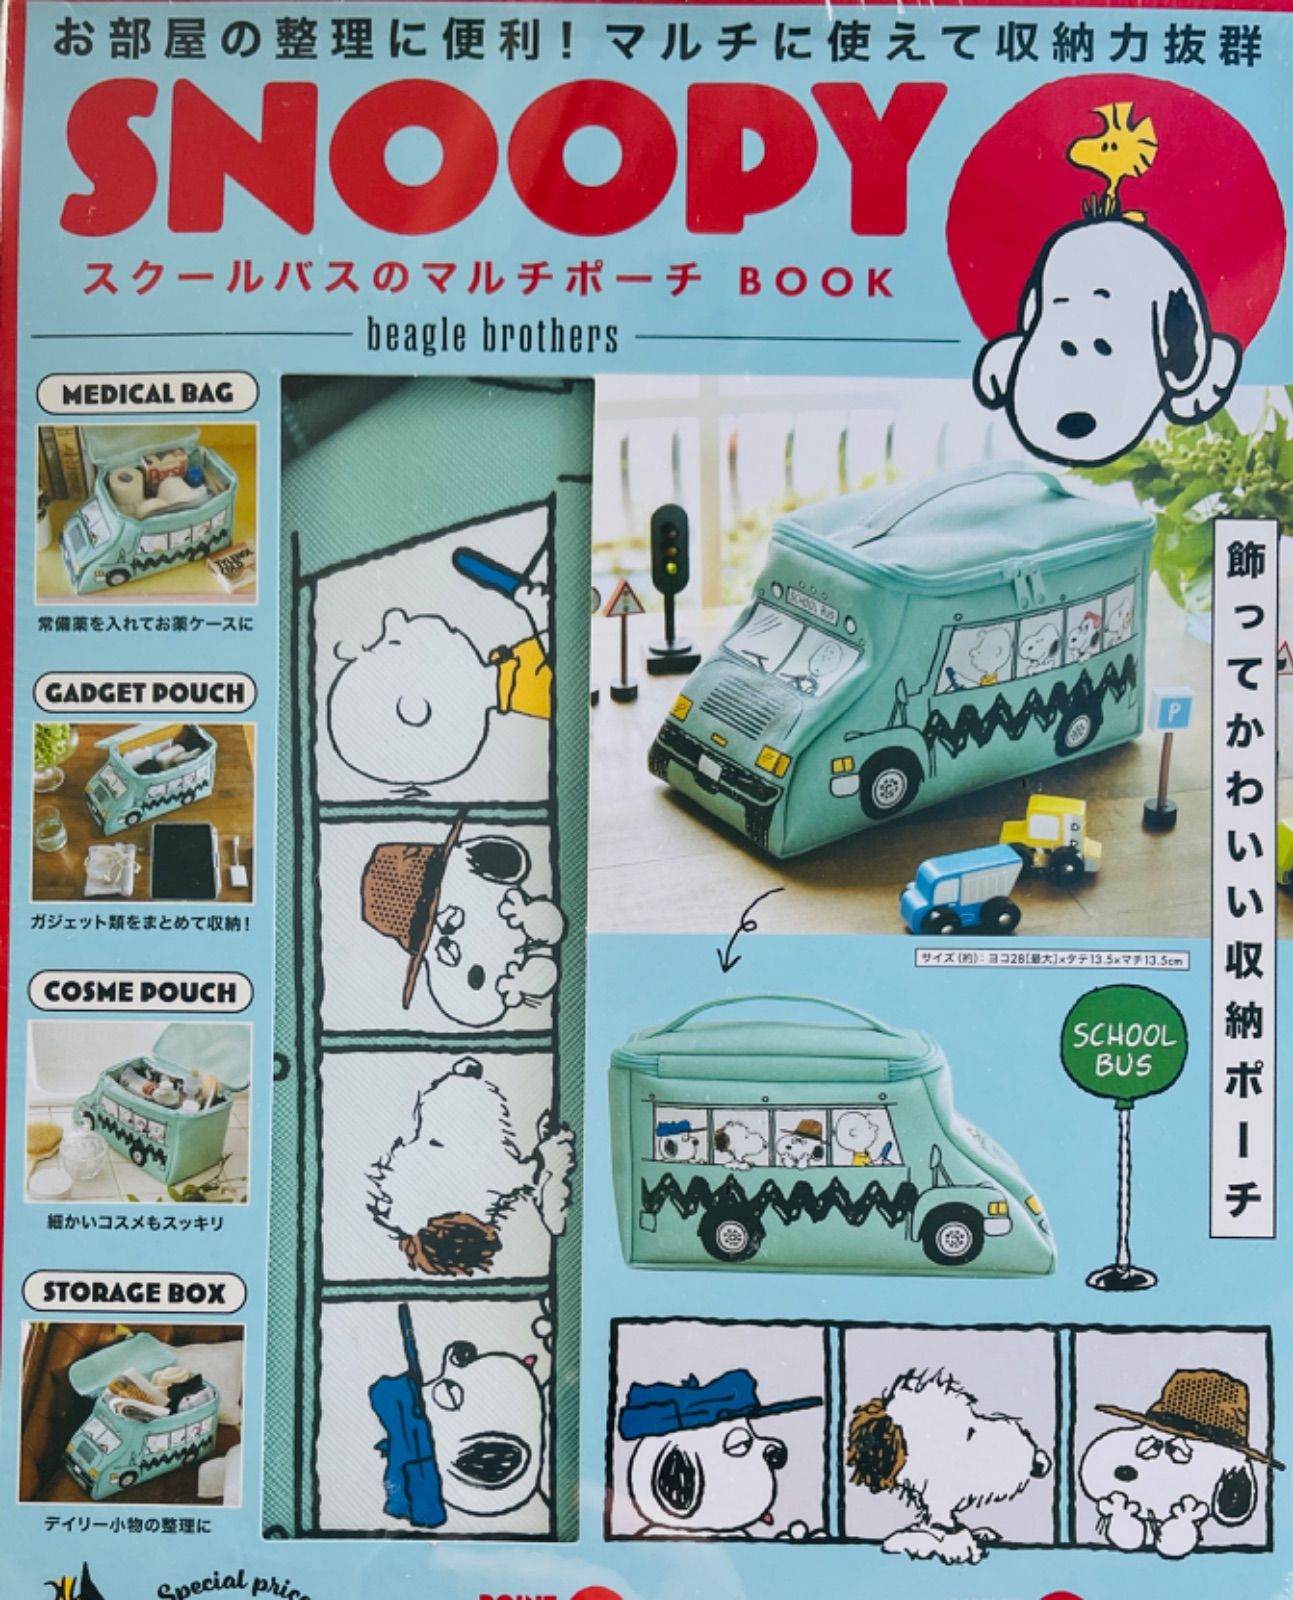 SNOOPY スクールバスのマルチポーチ BOOK beagle brothe… 新作商品 本・音楽・ゲーム 